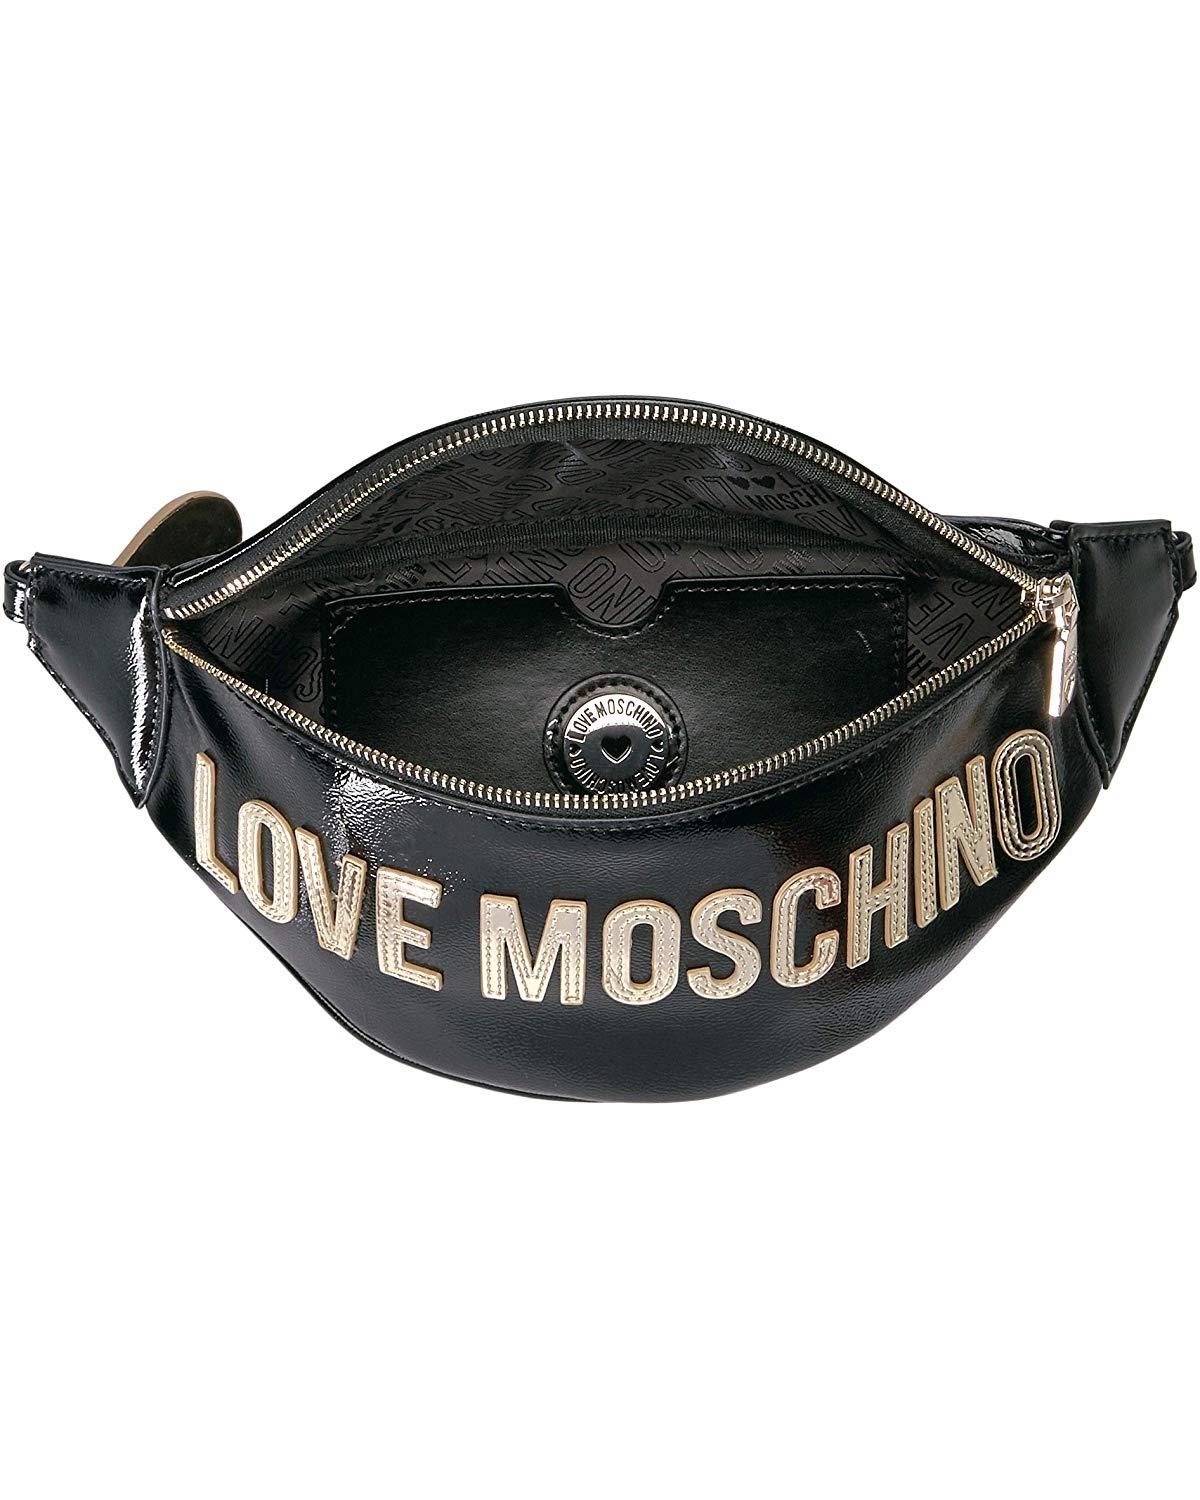 Love Moschino Logo Belt Bag in Nero (Black) - Lyst